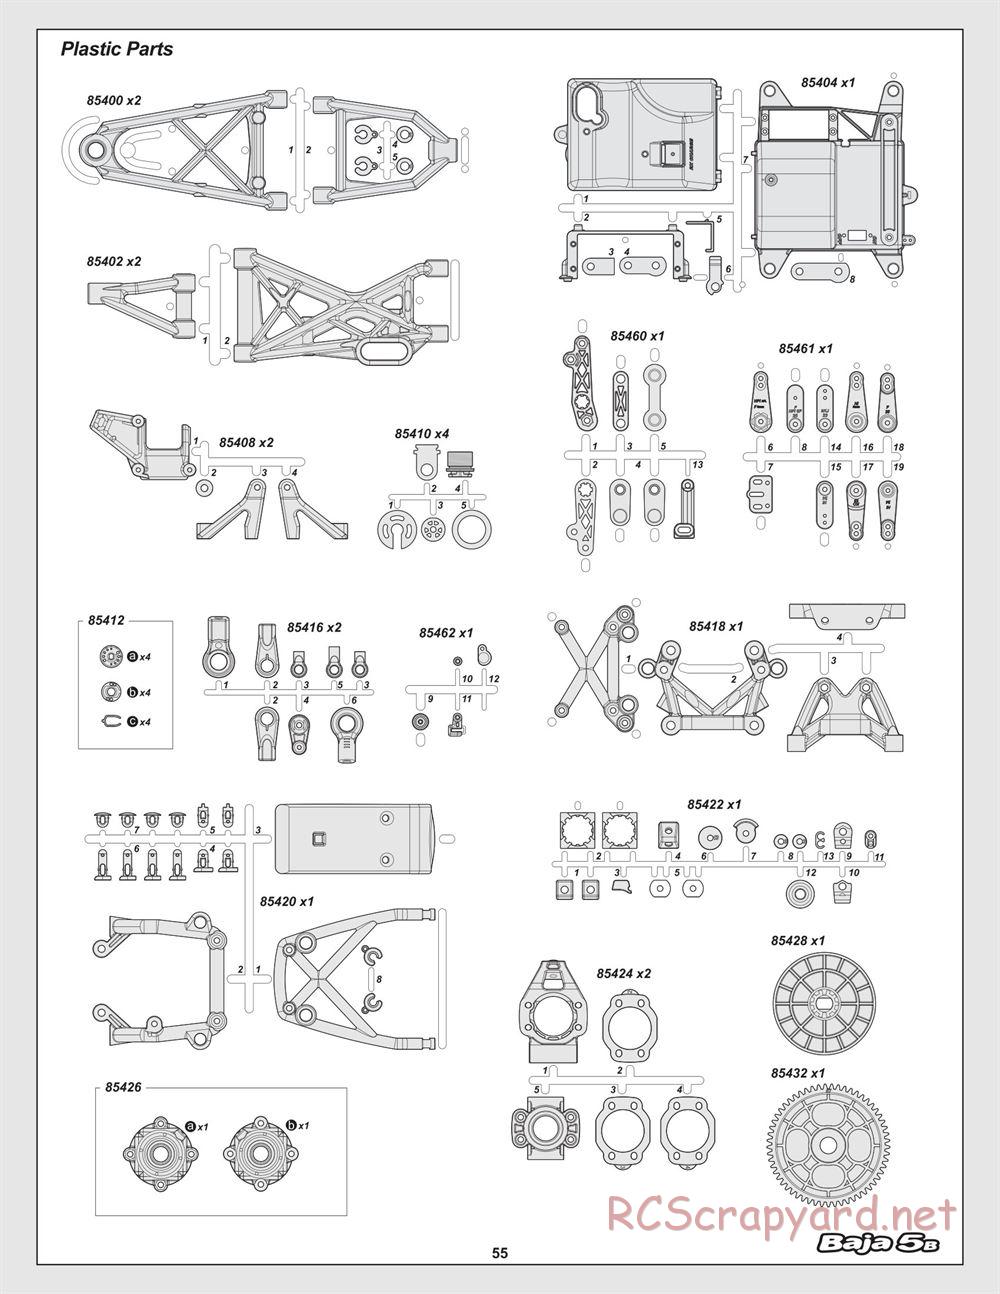 HPI - Baja 5B - Manual - Page 55